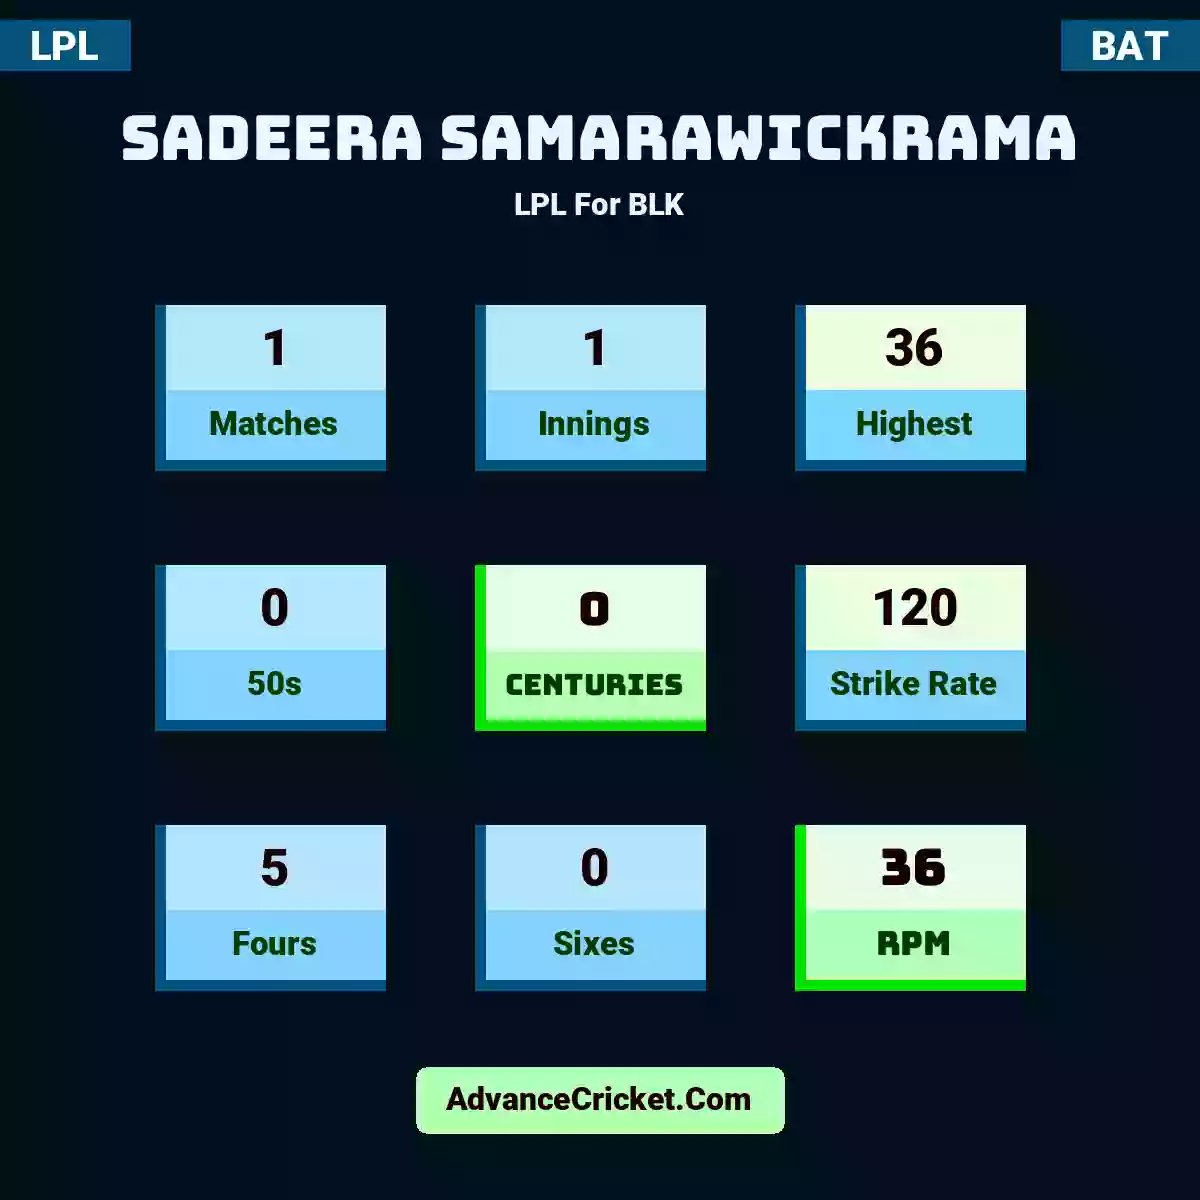 Sadeera Samarawickrama LPL  For BLK, Sadeera Samarawickrama played 1 matches, scored 36 runs as highest, 0 half-centuries, and 0 centuries, with a strike rate of 120. S.Samarawickrama hit 5 fours and 0 sixes, with an RPM of 36.